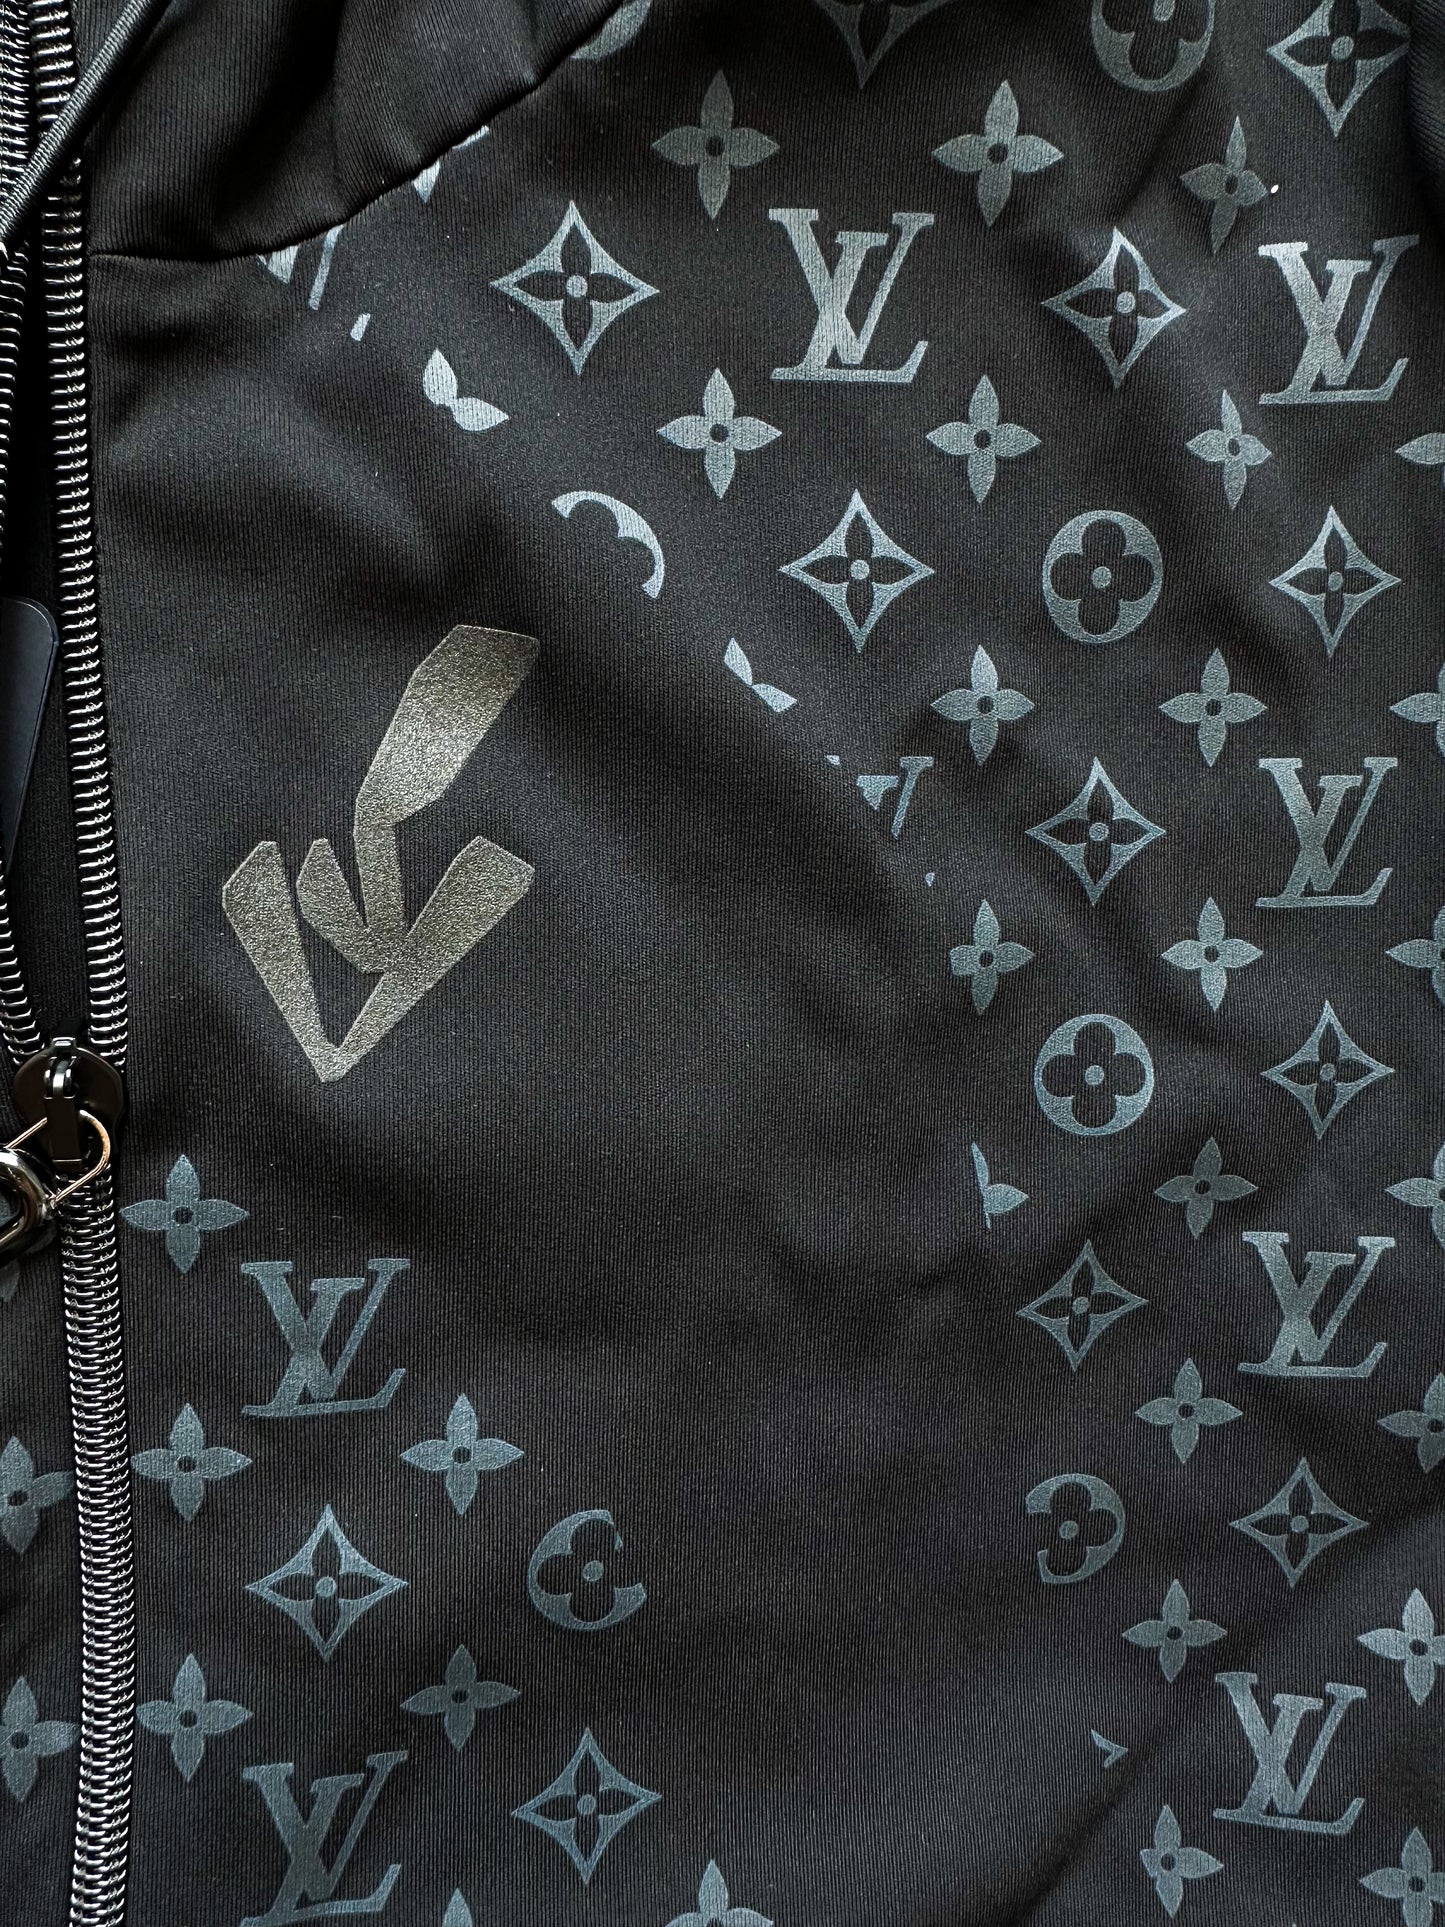 Louis Vuitton Louis Vuitton reflective monogram jacket silver